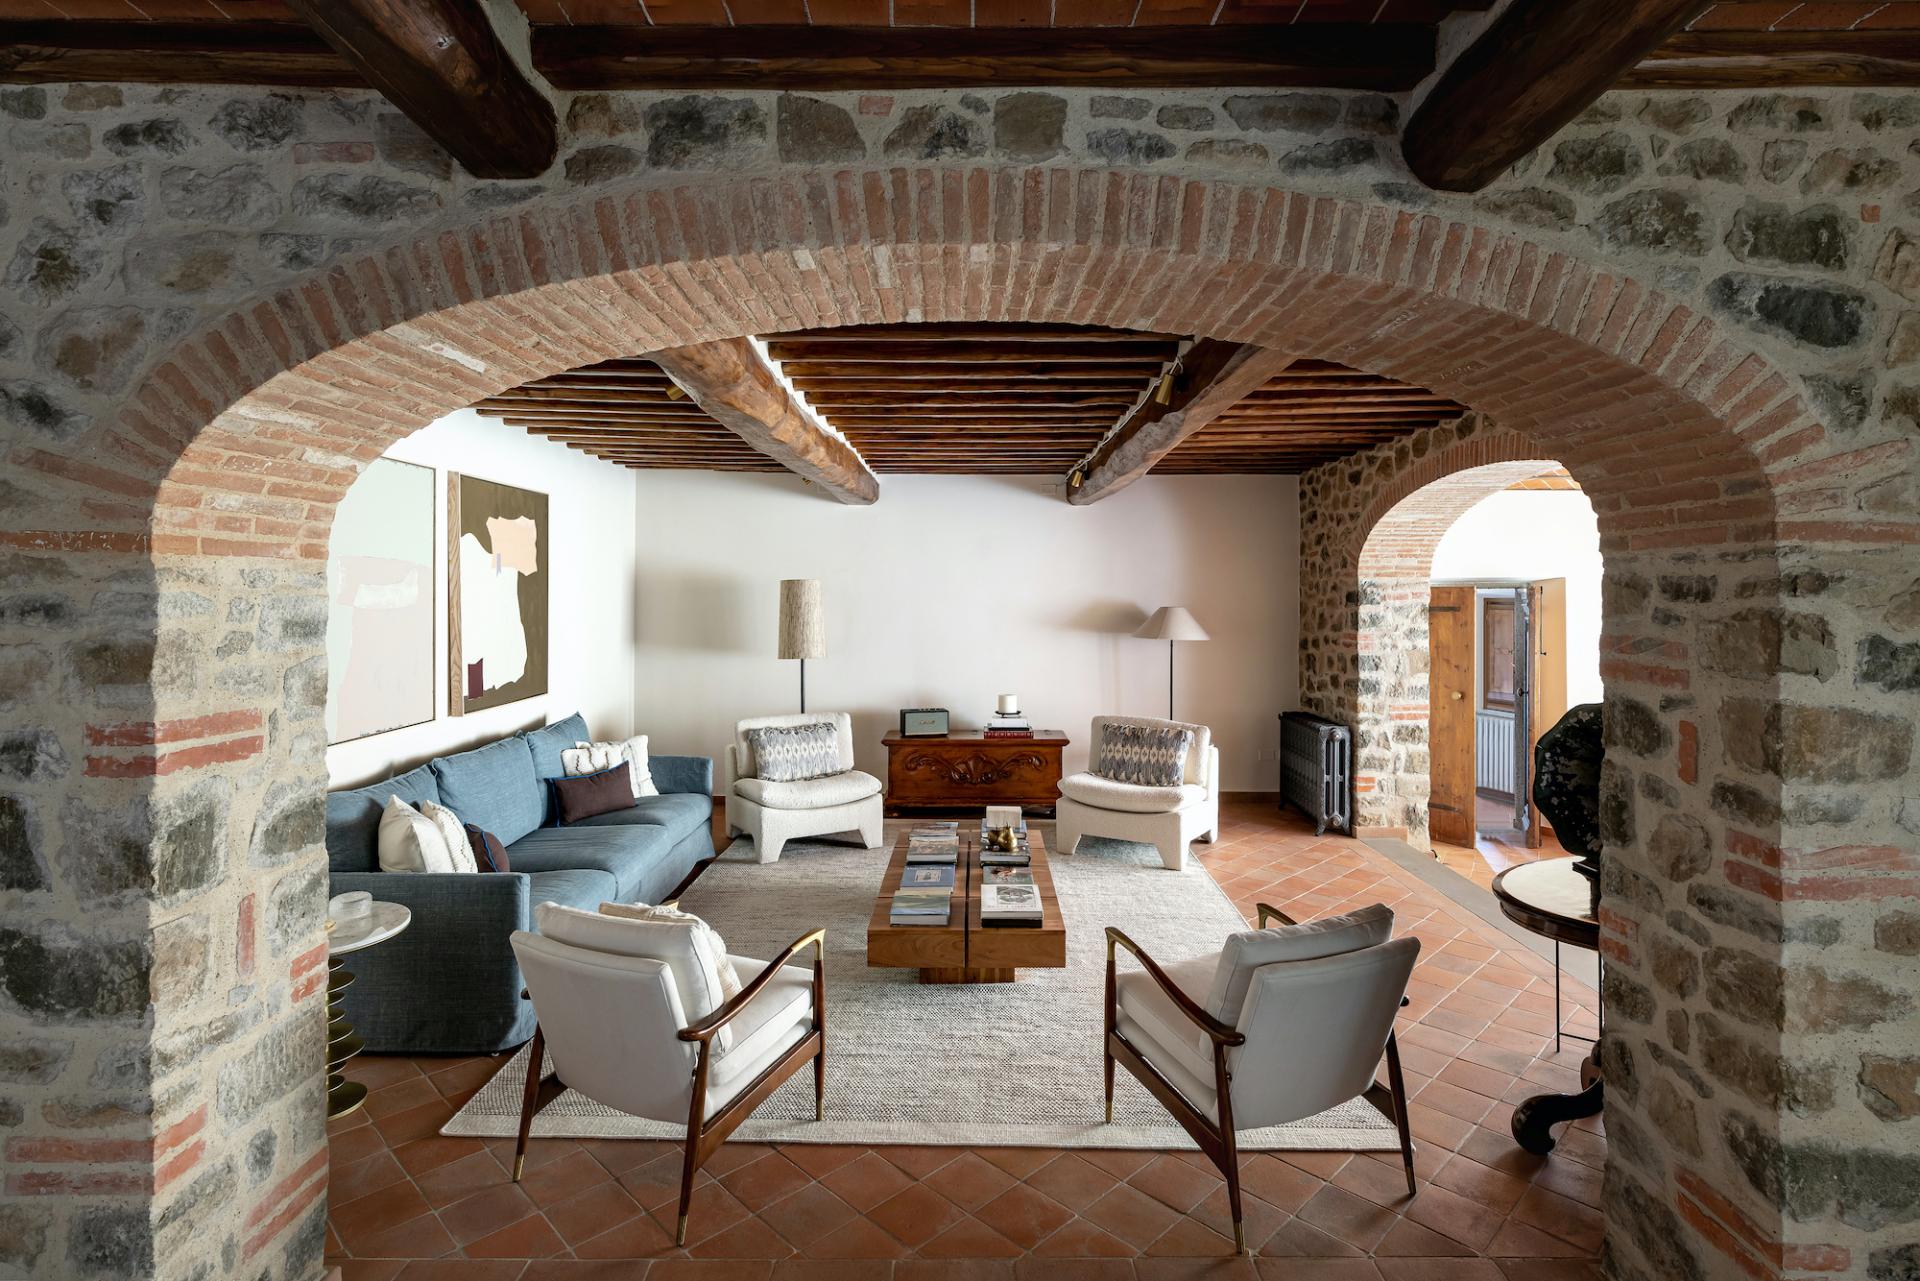 Tuscany Treasure: Old Italian Farmhouse Turned Into a Stunning Holiday Home